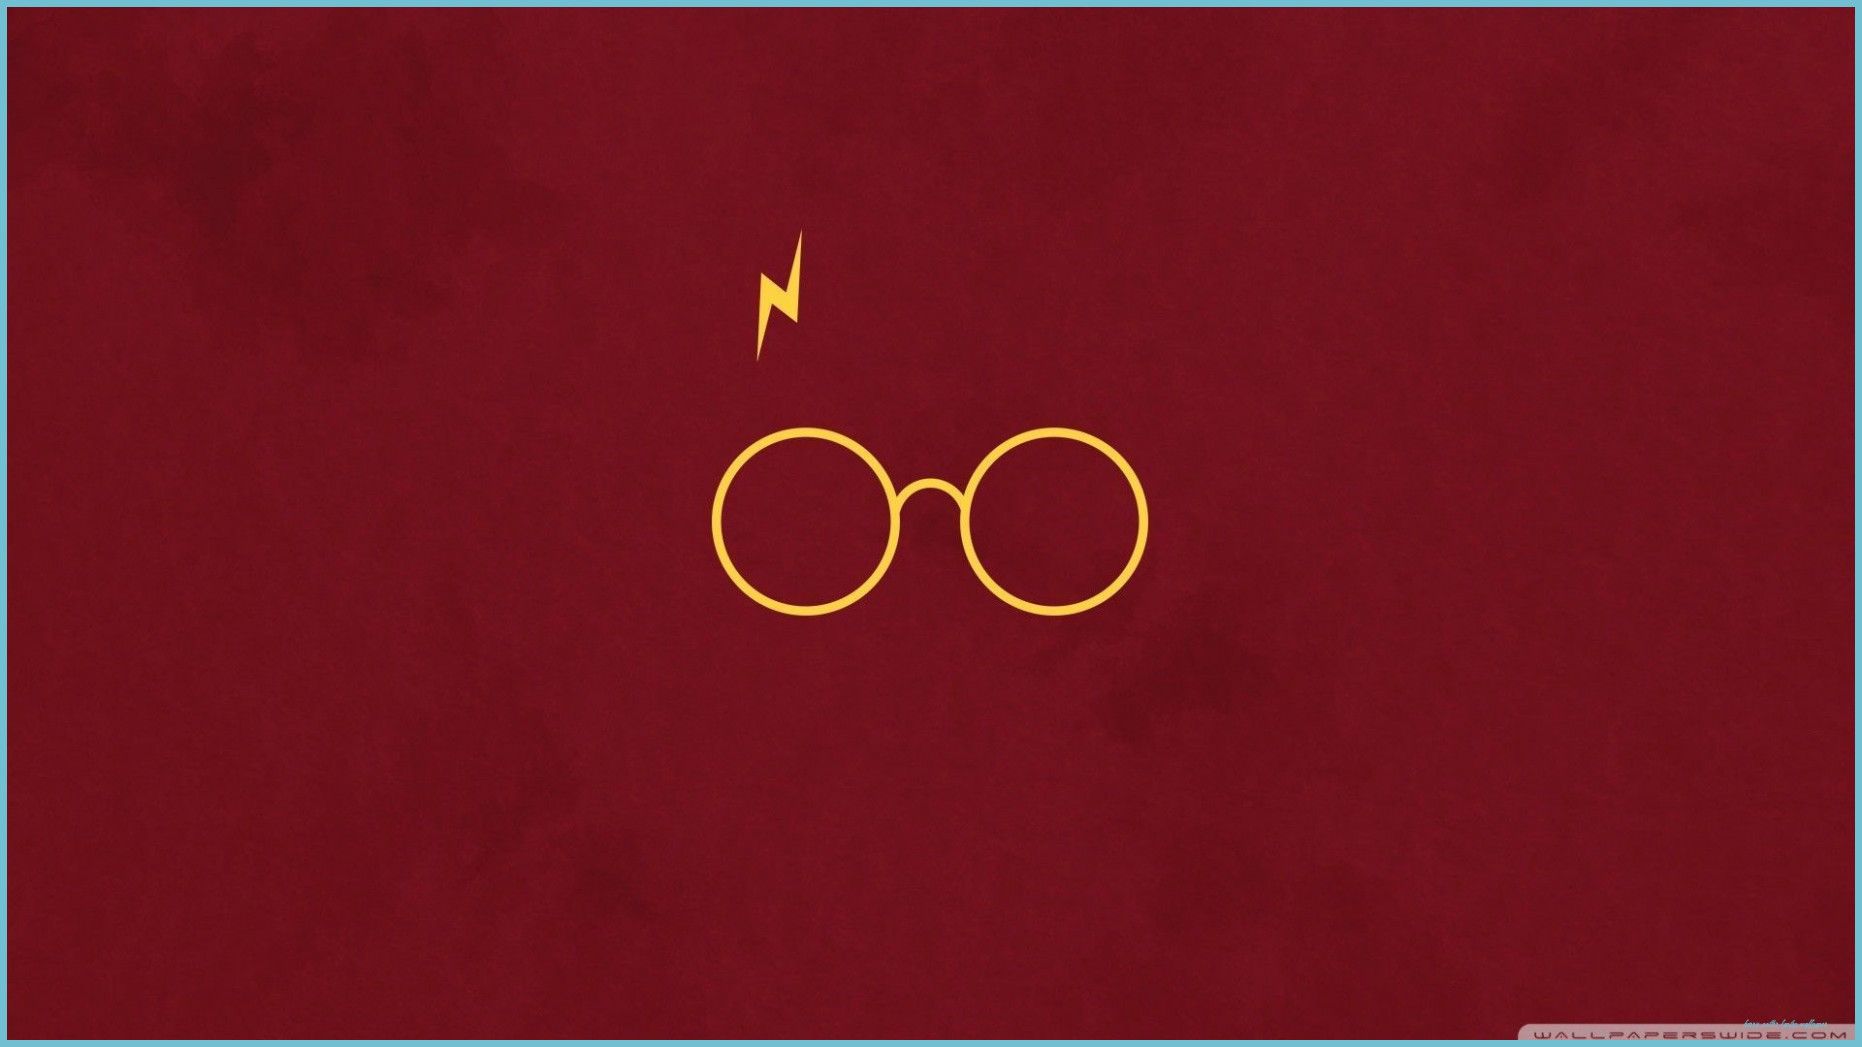 Harry Potter glasses with a lightning bolt wallpaper - Harry Potter